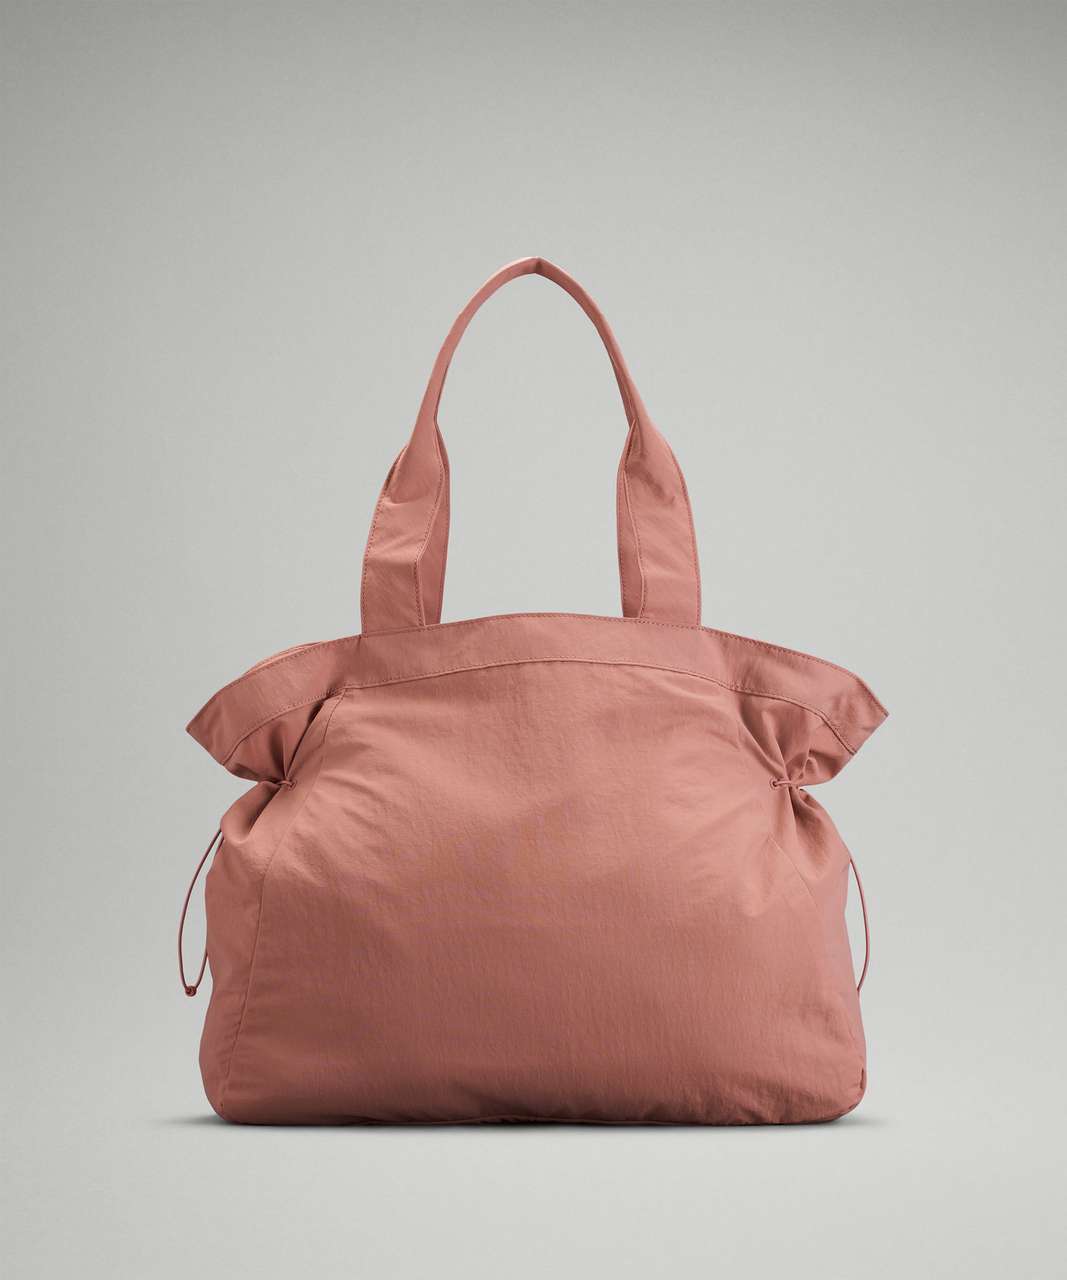 viewm Tote Bag for Women, Gym Tote Bags for Women with Lulu 18L Side-Cinch  Shopper Shoulder Bag Handbag for Travel Work